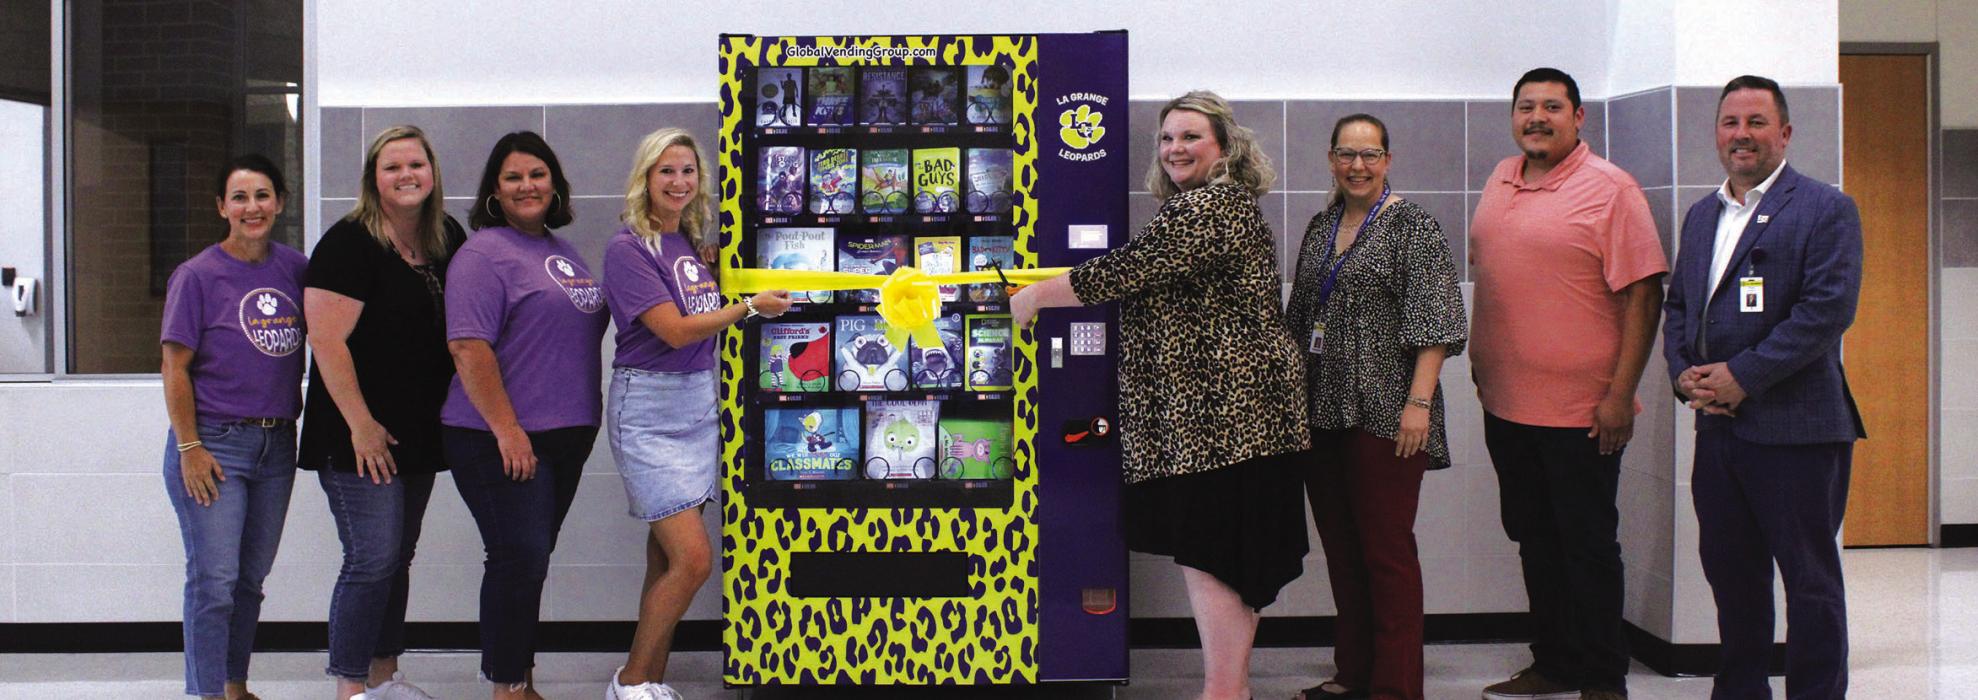 New Book Vending Machine Unveiled at La Grange Elementary